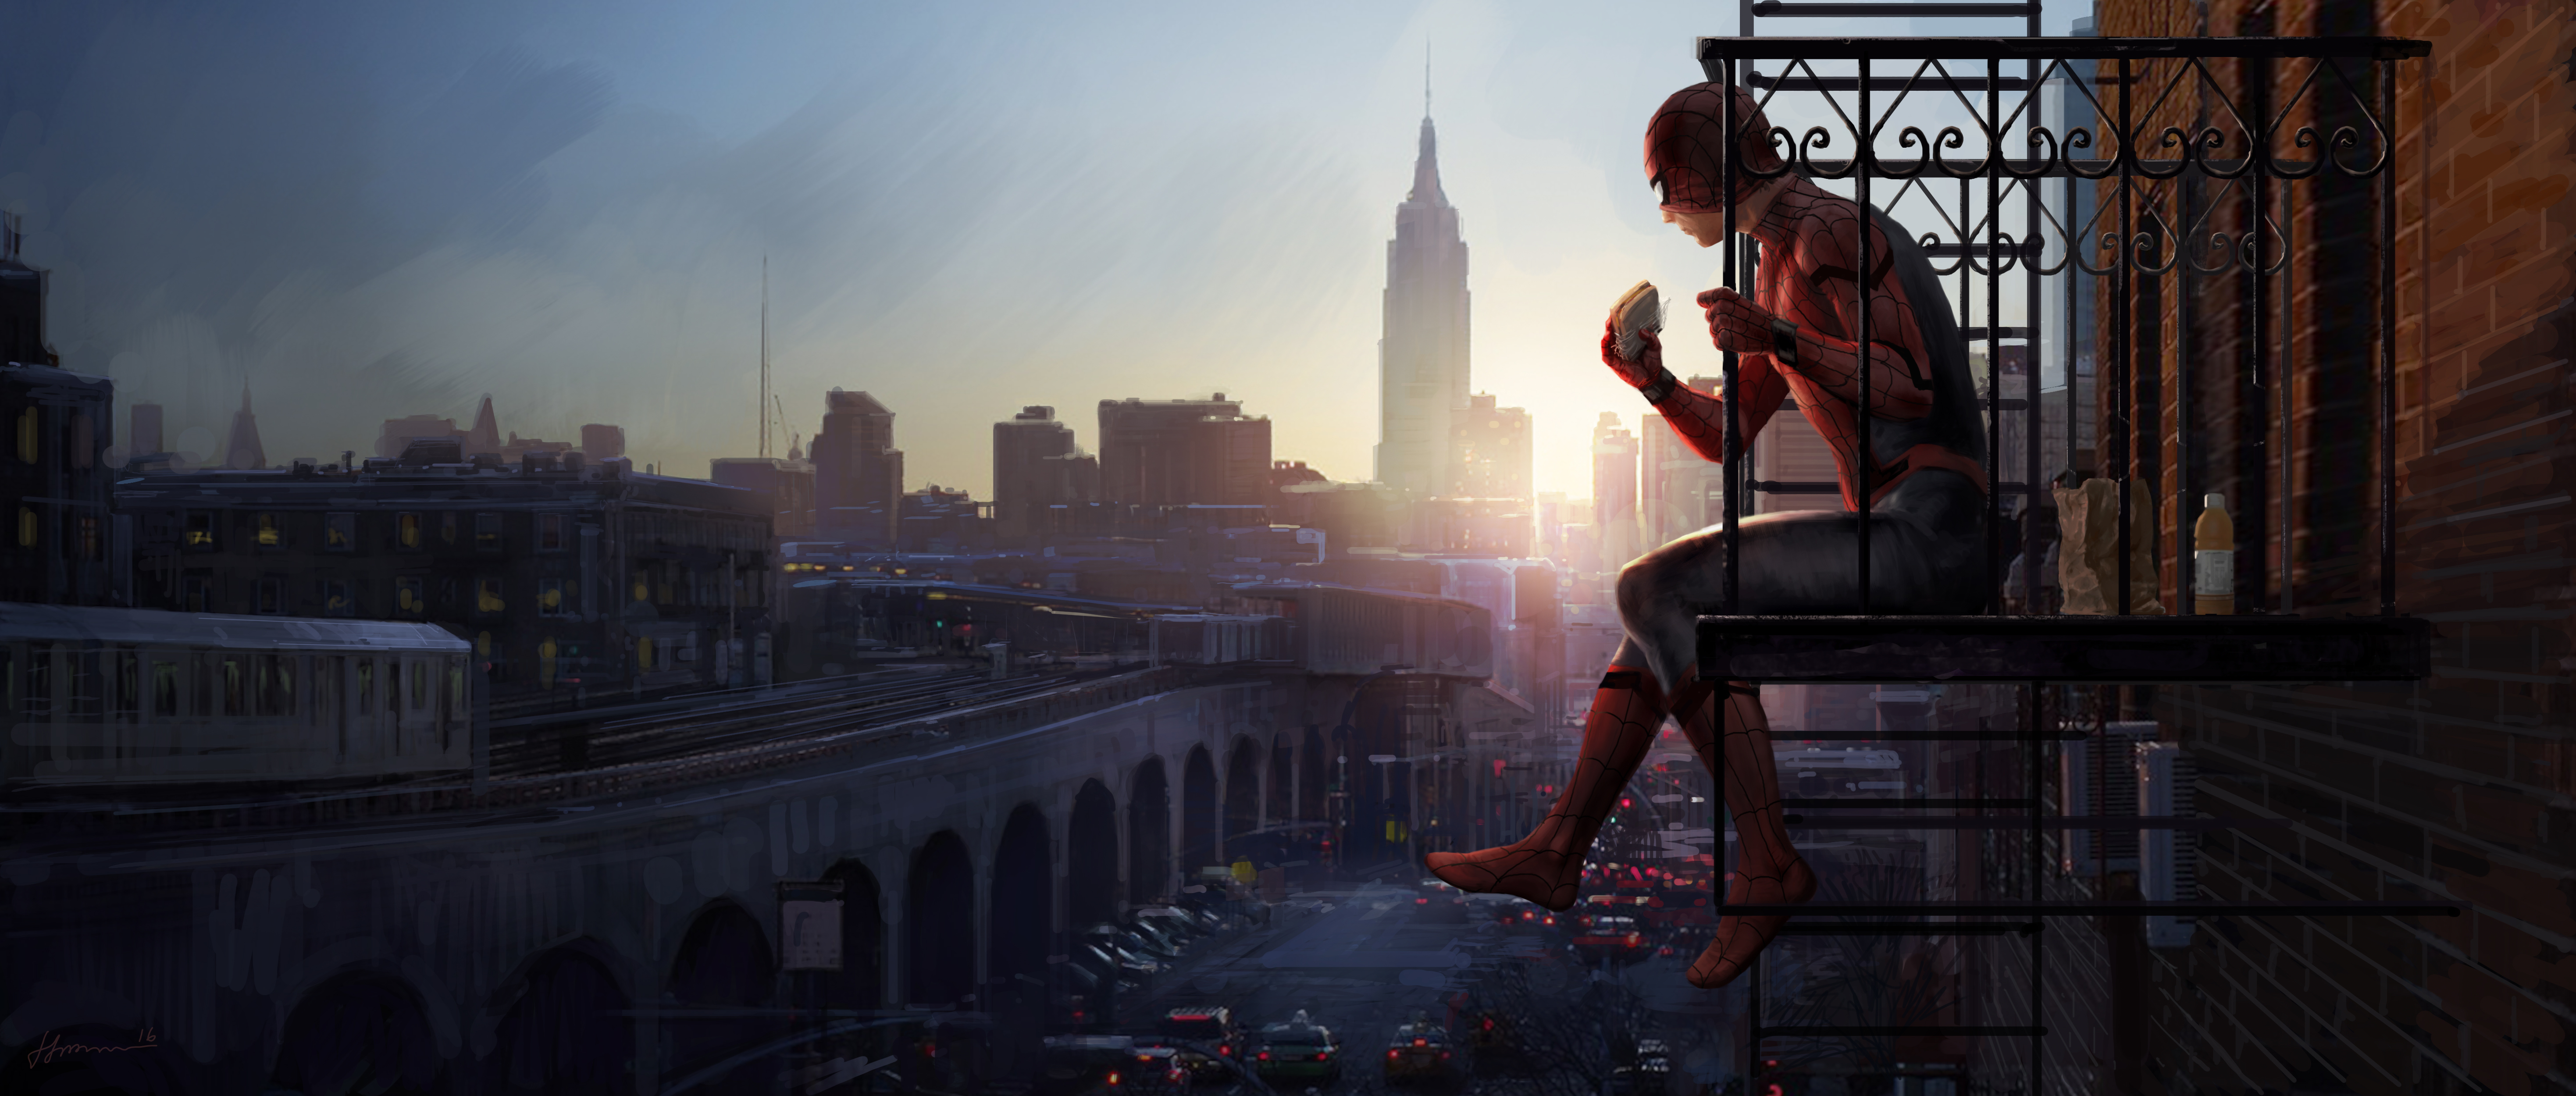 Spider-Man: Homecoming 4k Ultra HD Wallpaper by Henrik Tamm